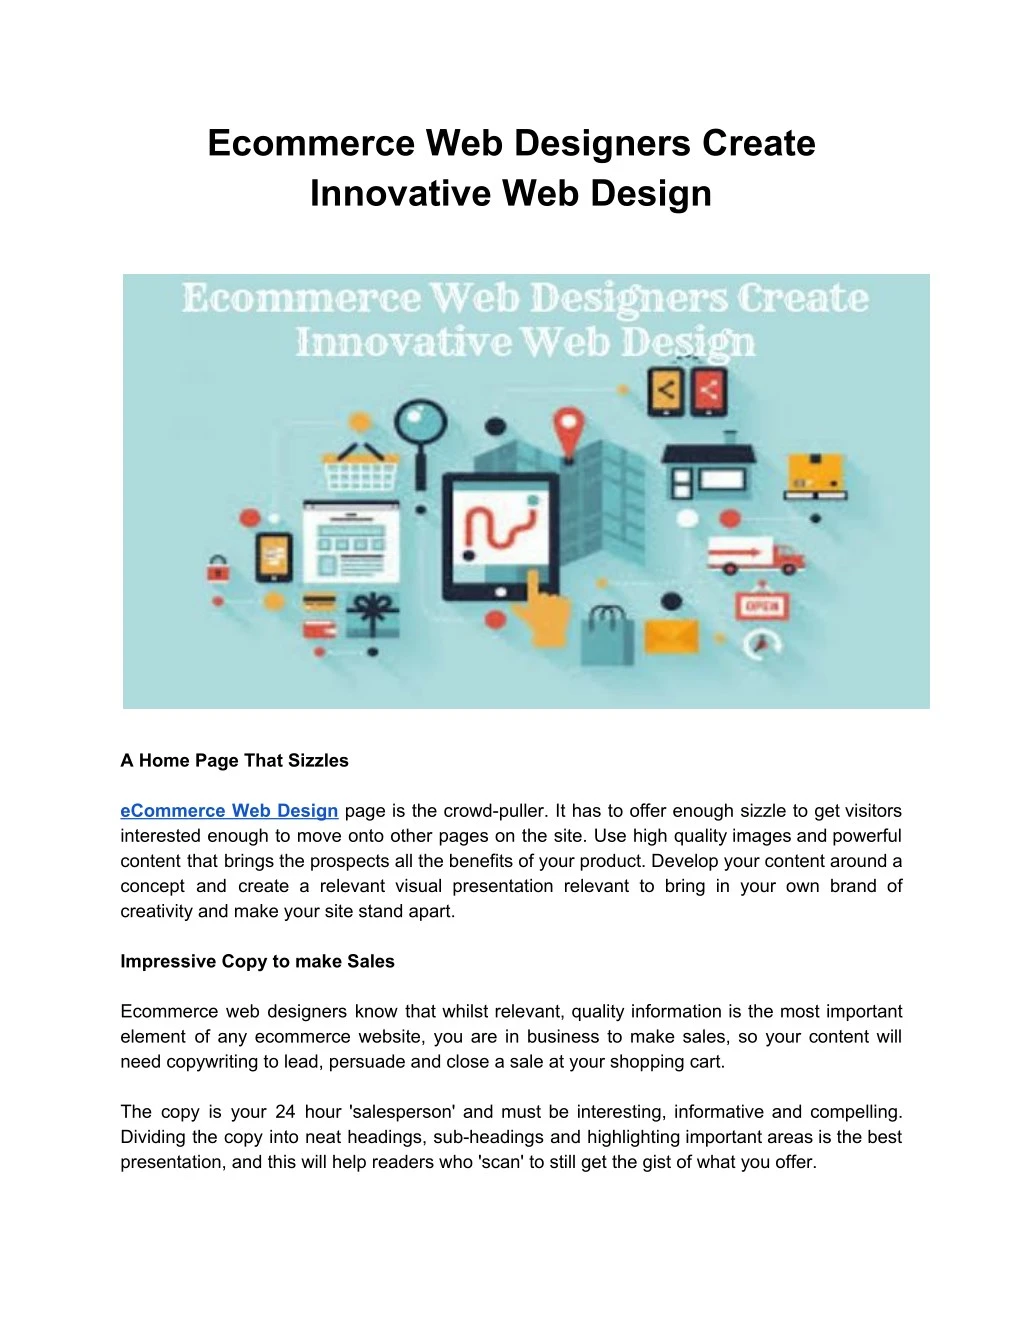 ecommerce web designers create innovative